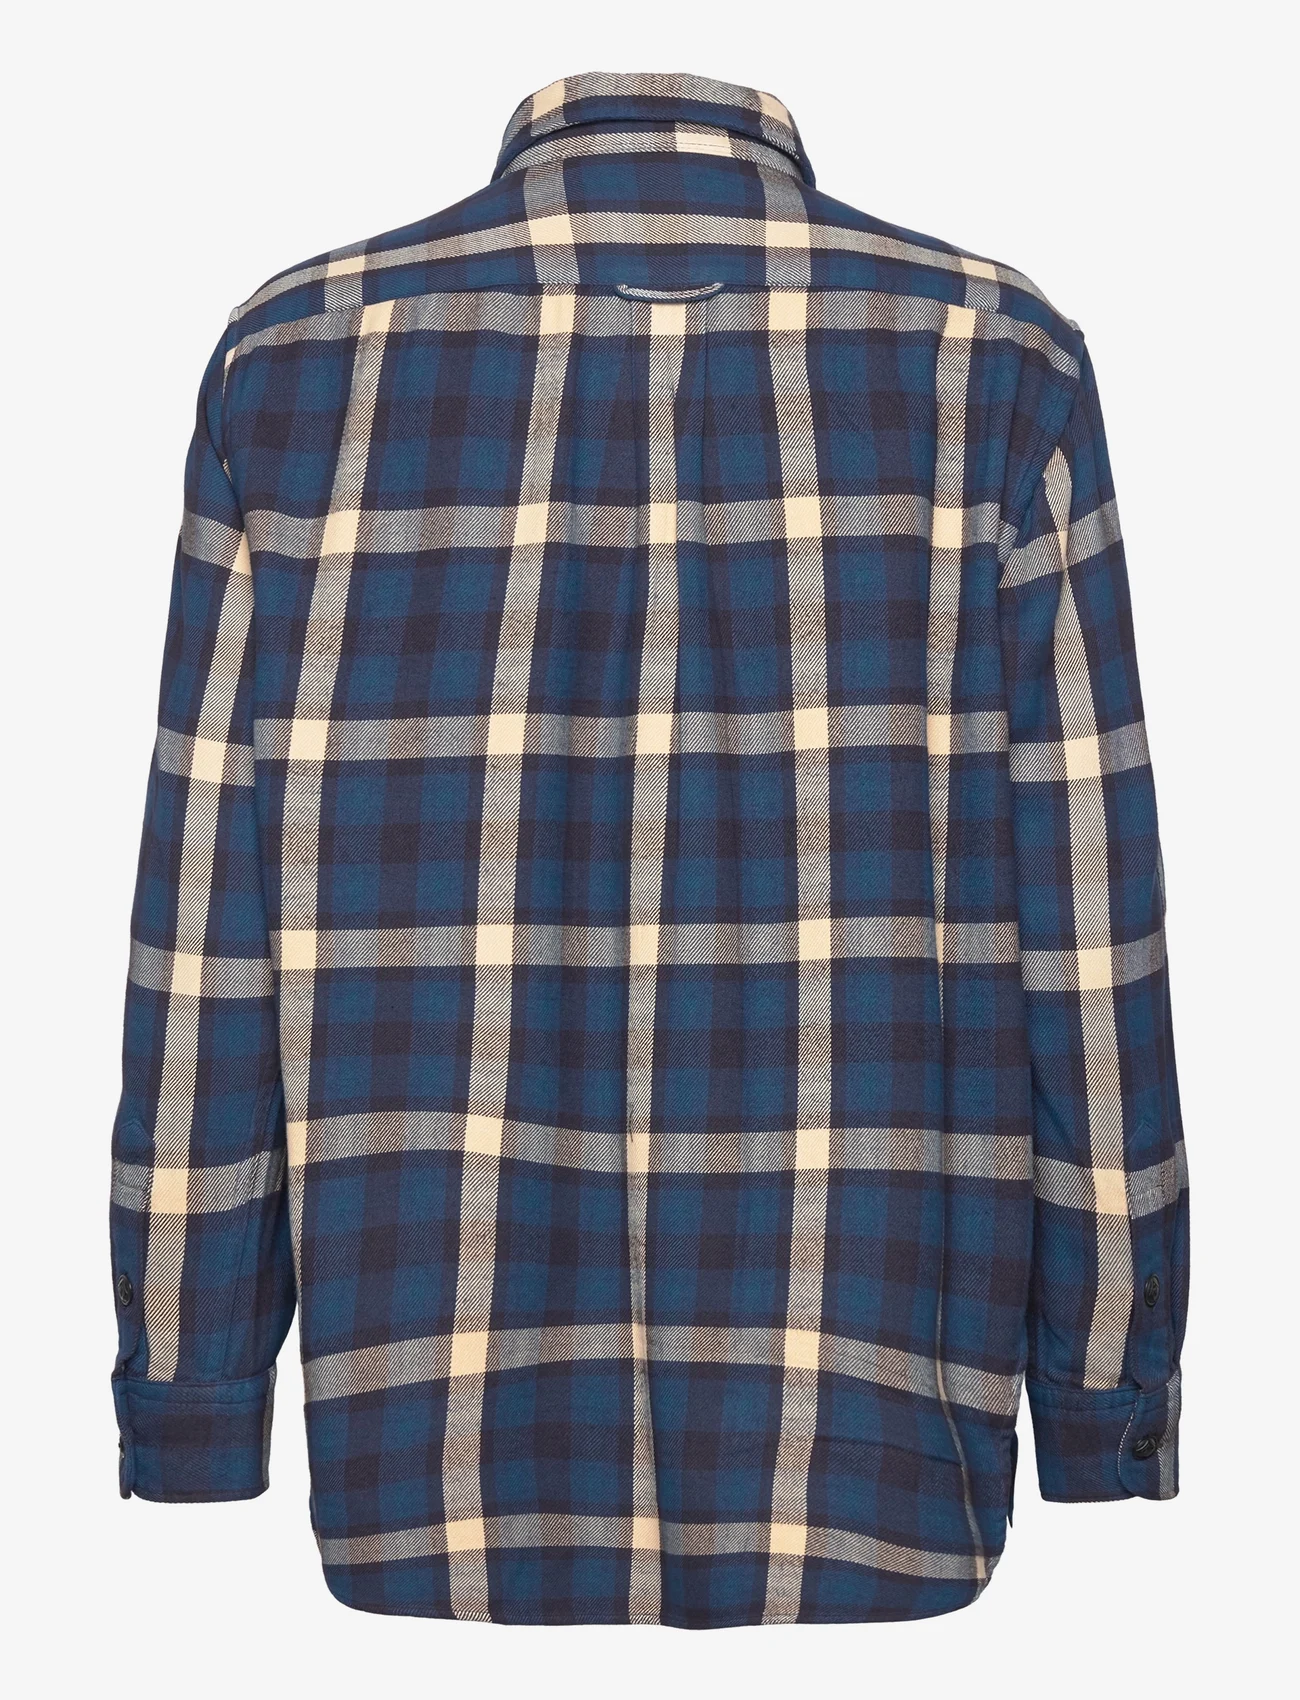 Polo Ralph Lauren - Oversize Fit Plaid Cotton Twill Shirt - långärmade skjortor - 1509 blue multi p - 1